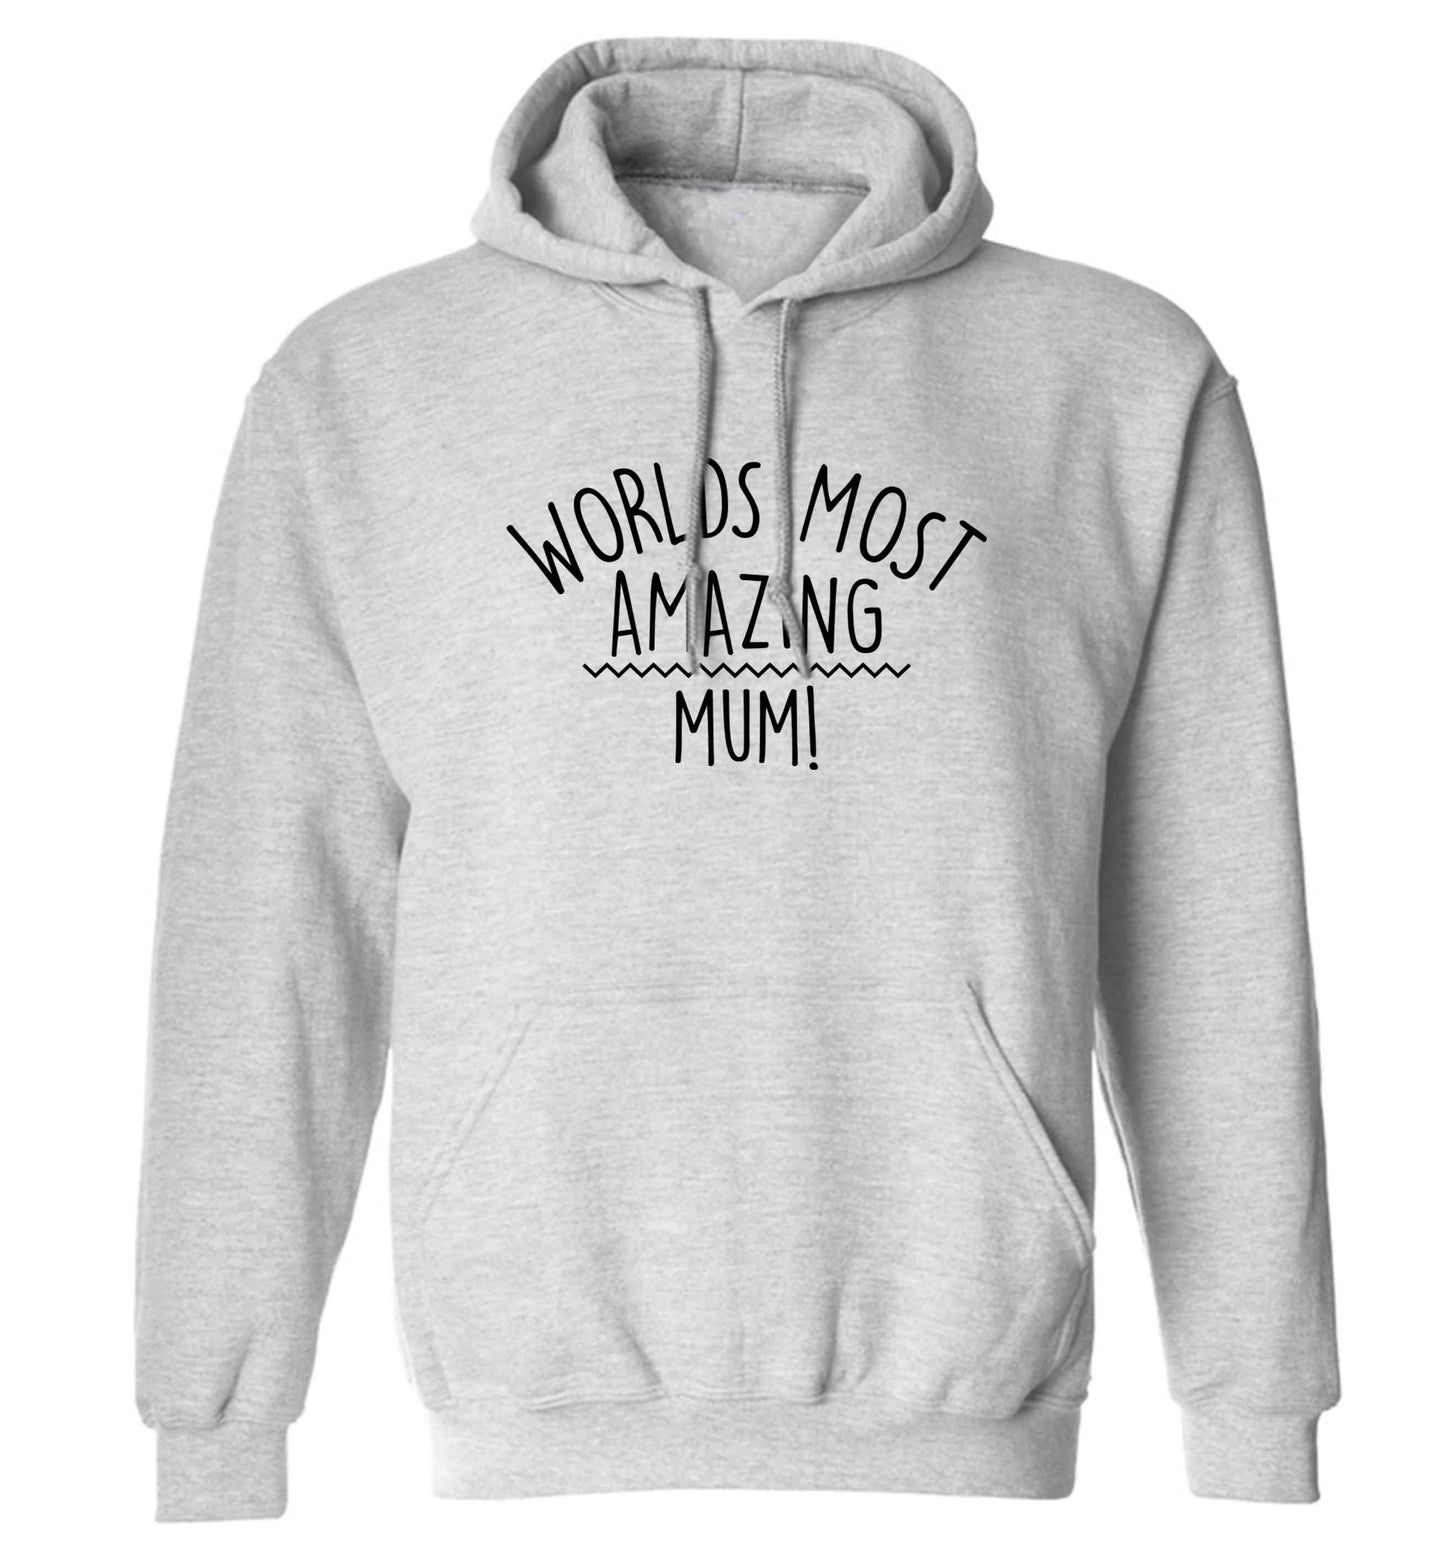 Worlds most amazing mum adults unisex grey hoodie 2XL